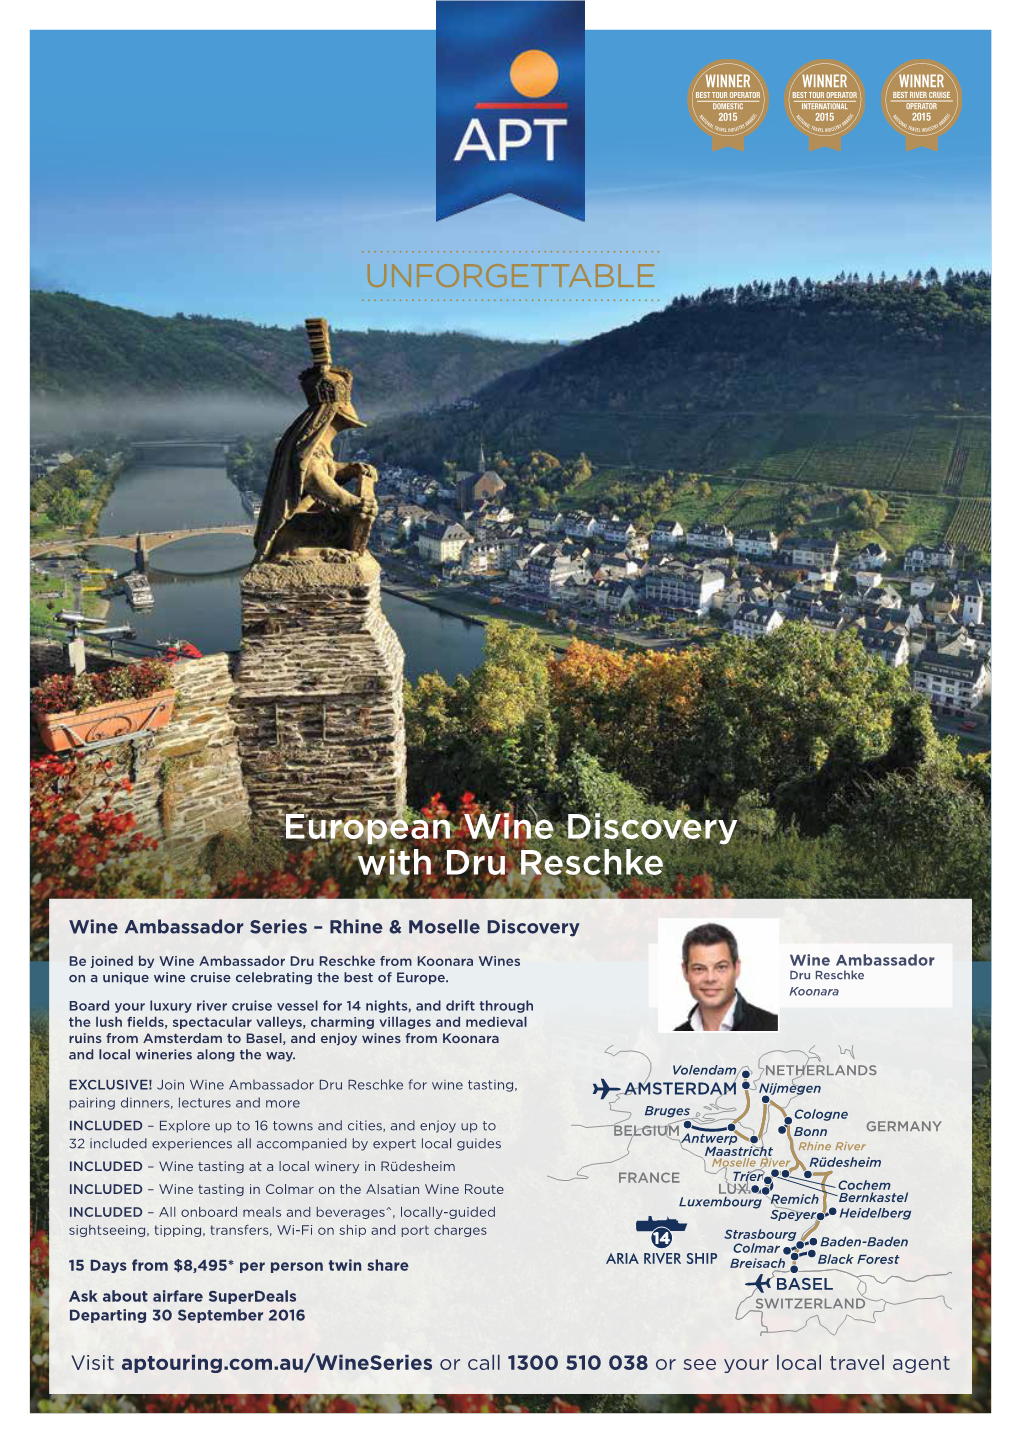 European Wine Discovery with Dru Reschke